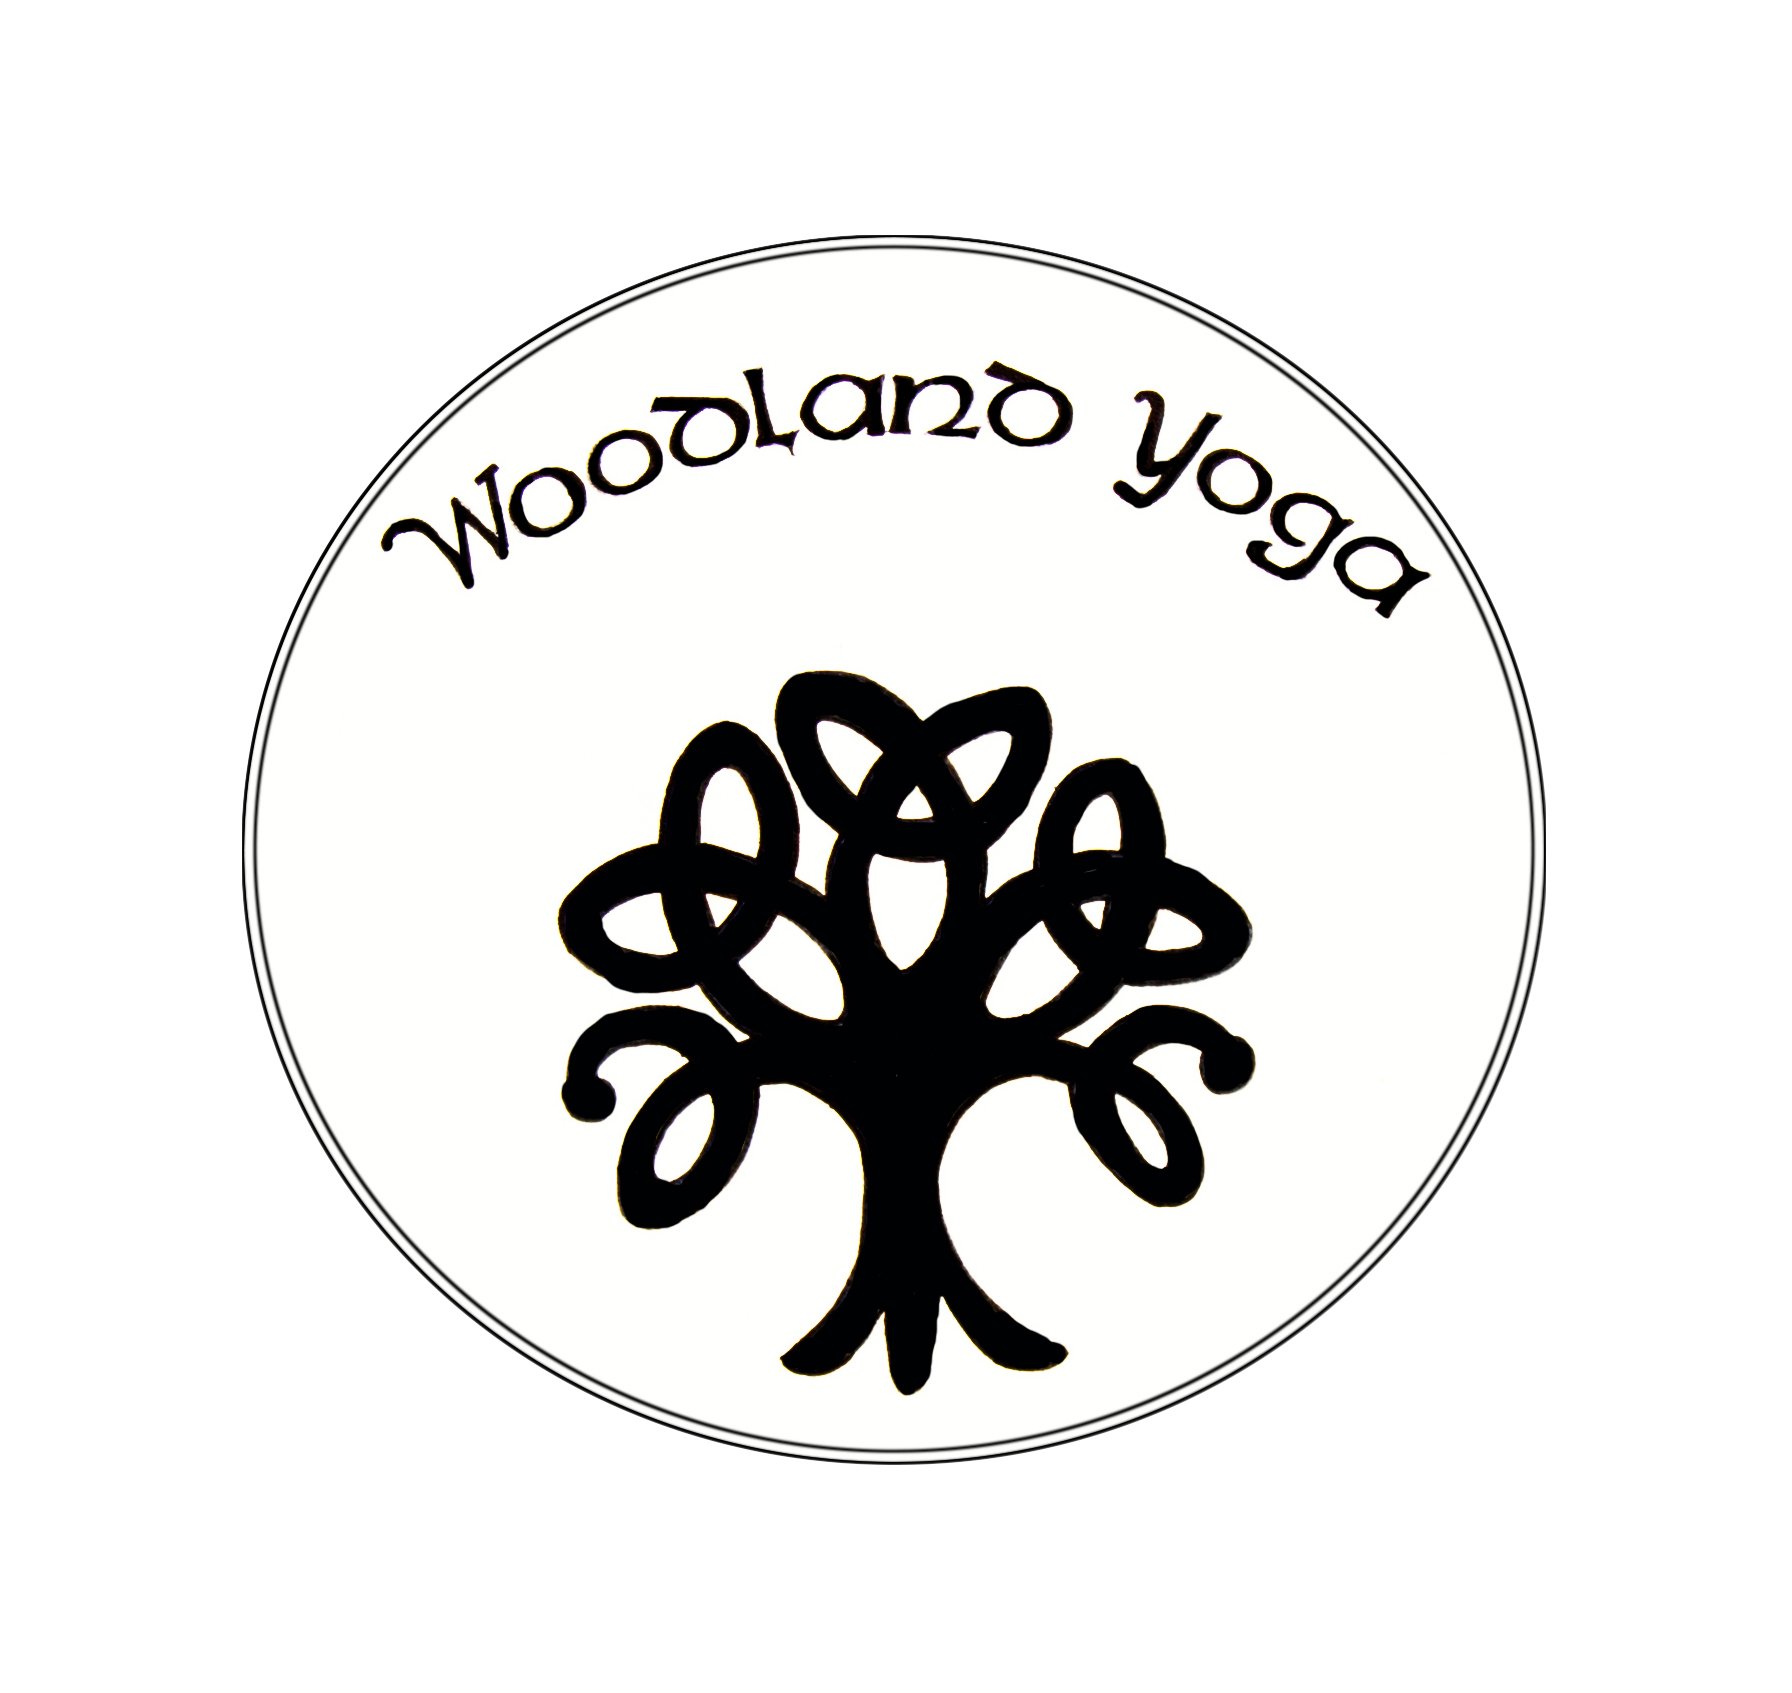 Woodland Yoga  St. Albans Hertfordshire — We Are St. Albans